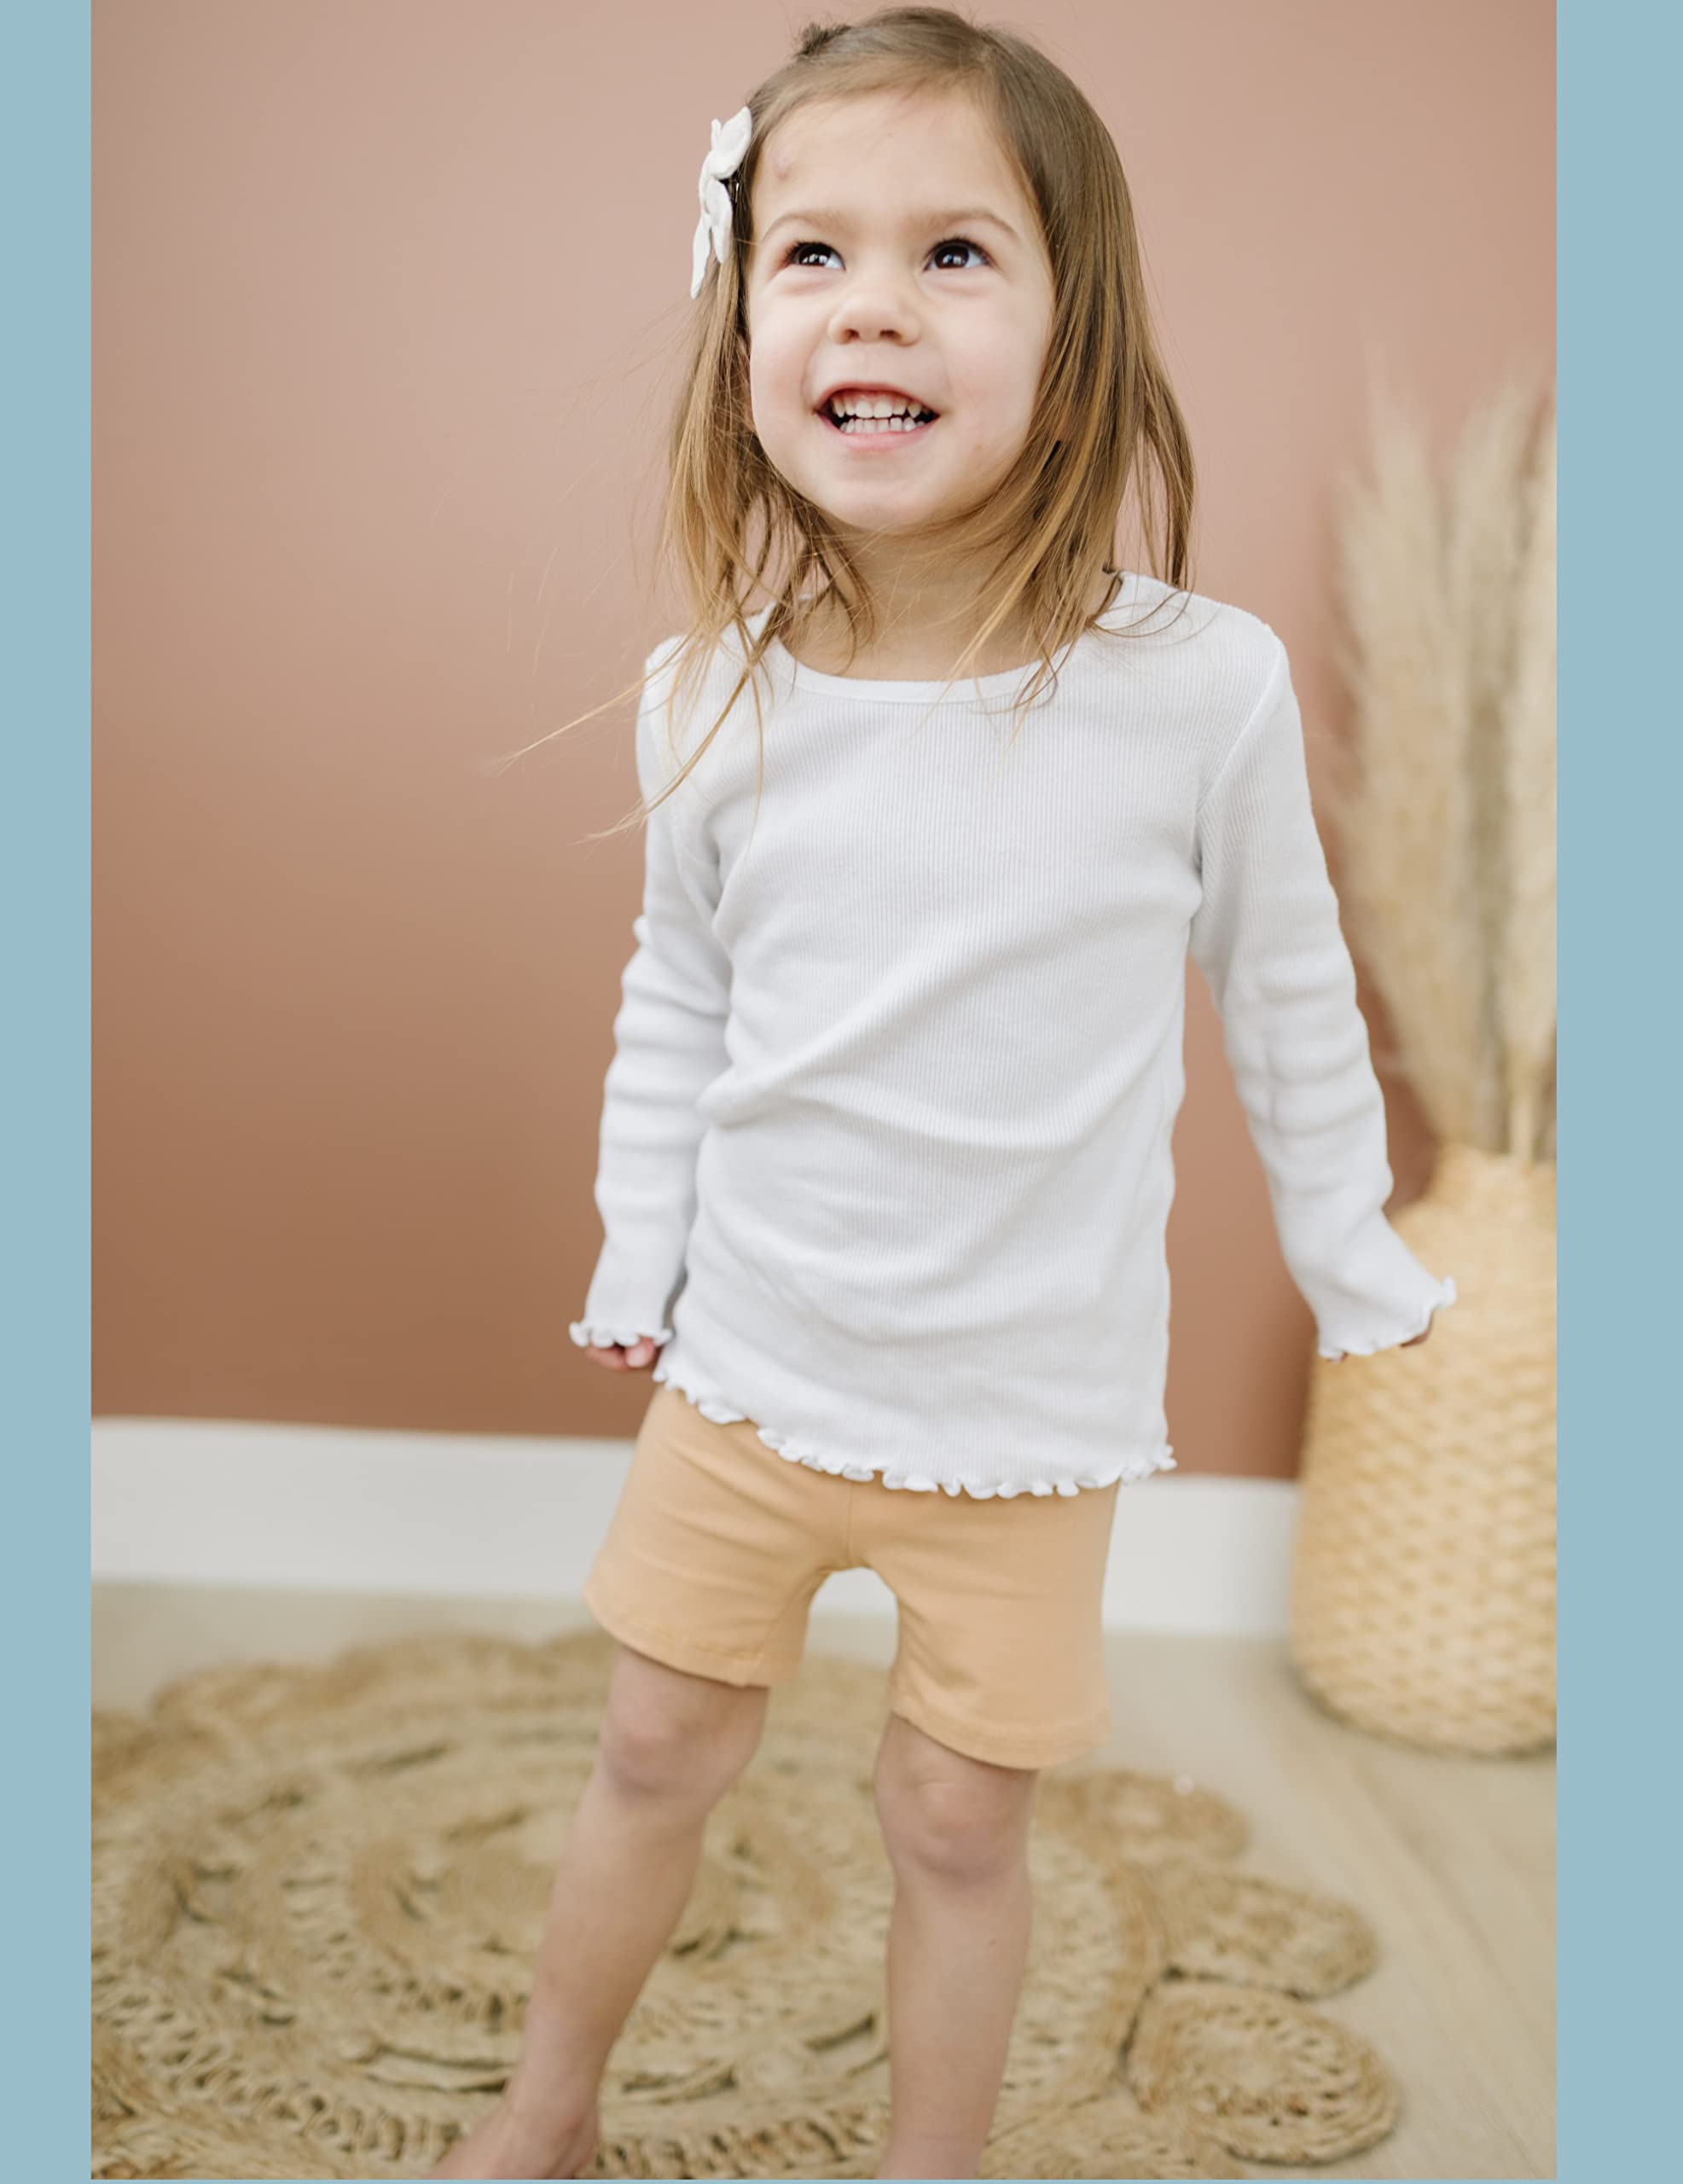 MY WAY Toddlers & Girls Bike Shorts Cotton & Spandex — Biker Shorts for Under Dresses, Cartwheel & Dance - 3 Pack Sizes 2T-16